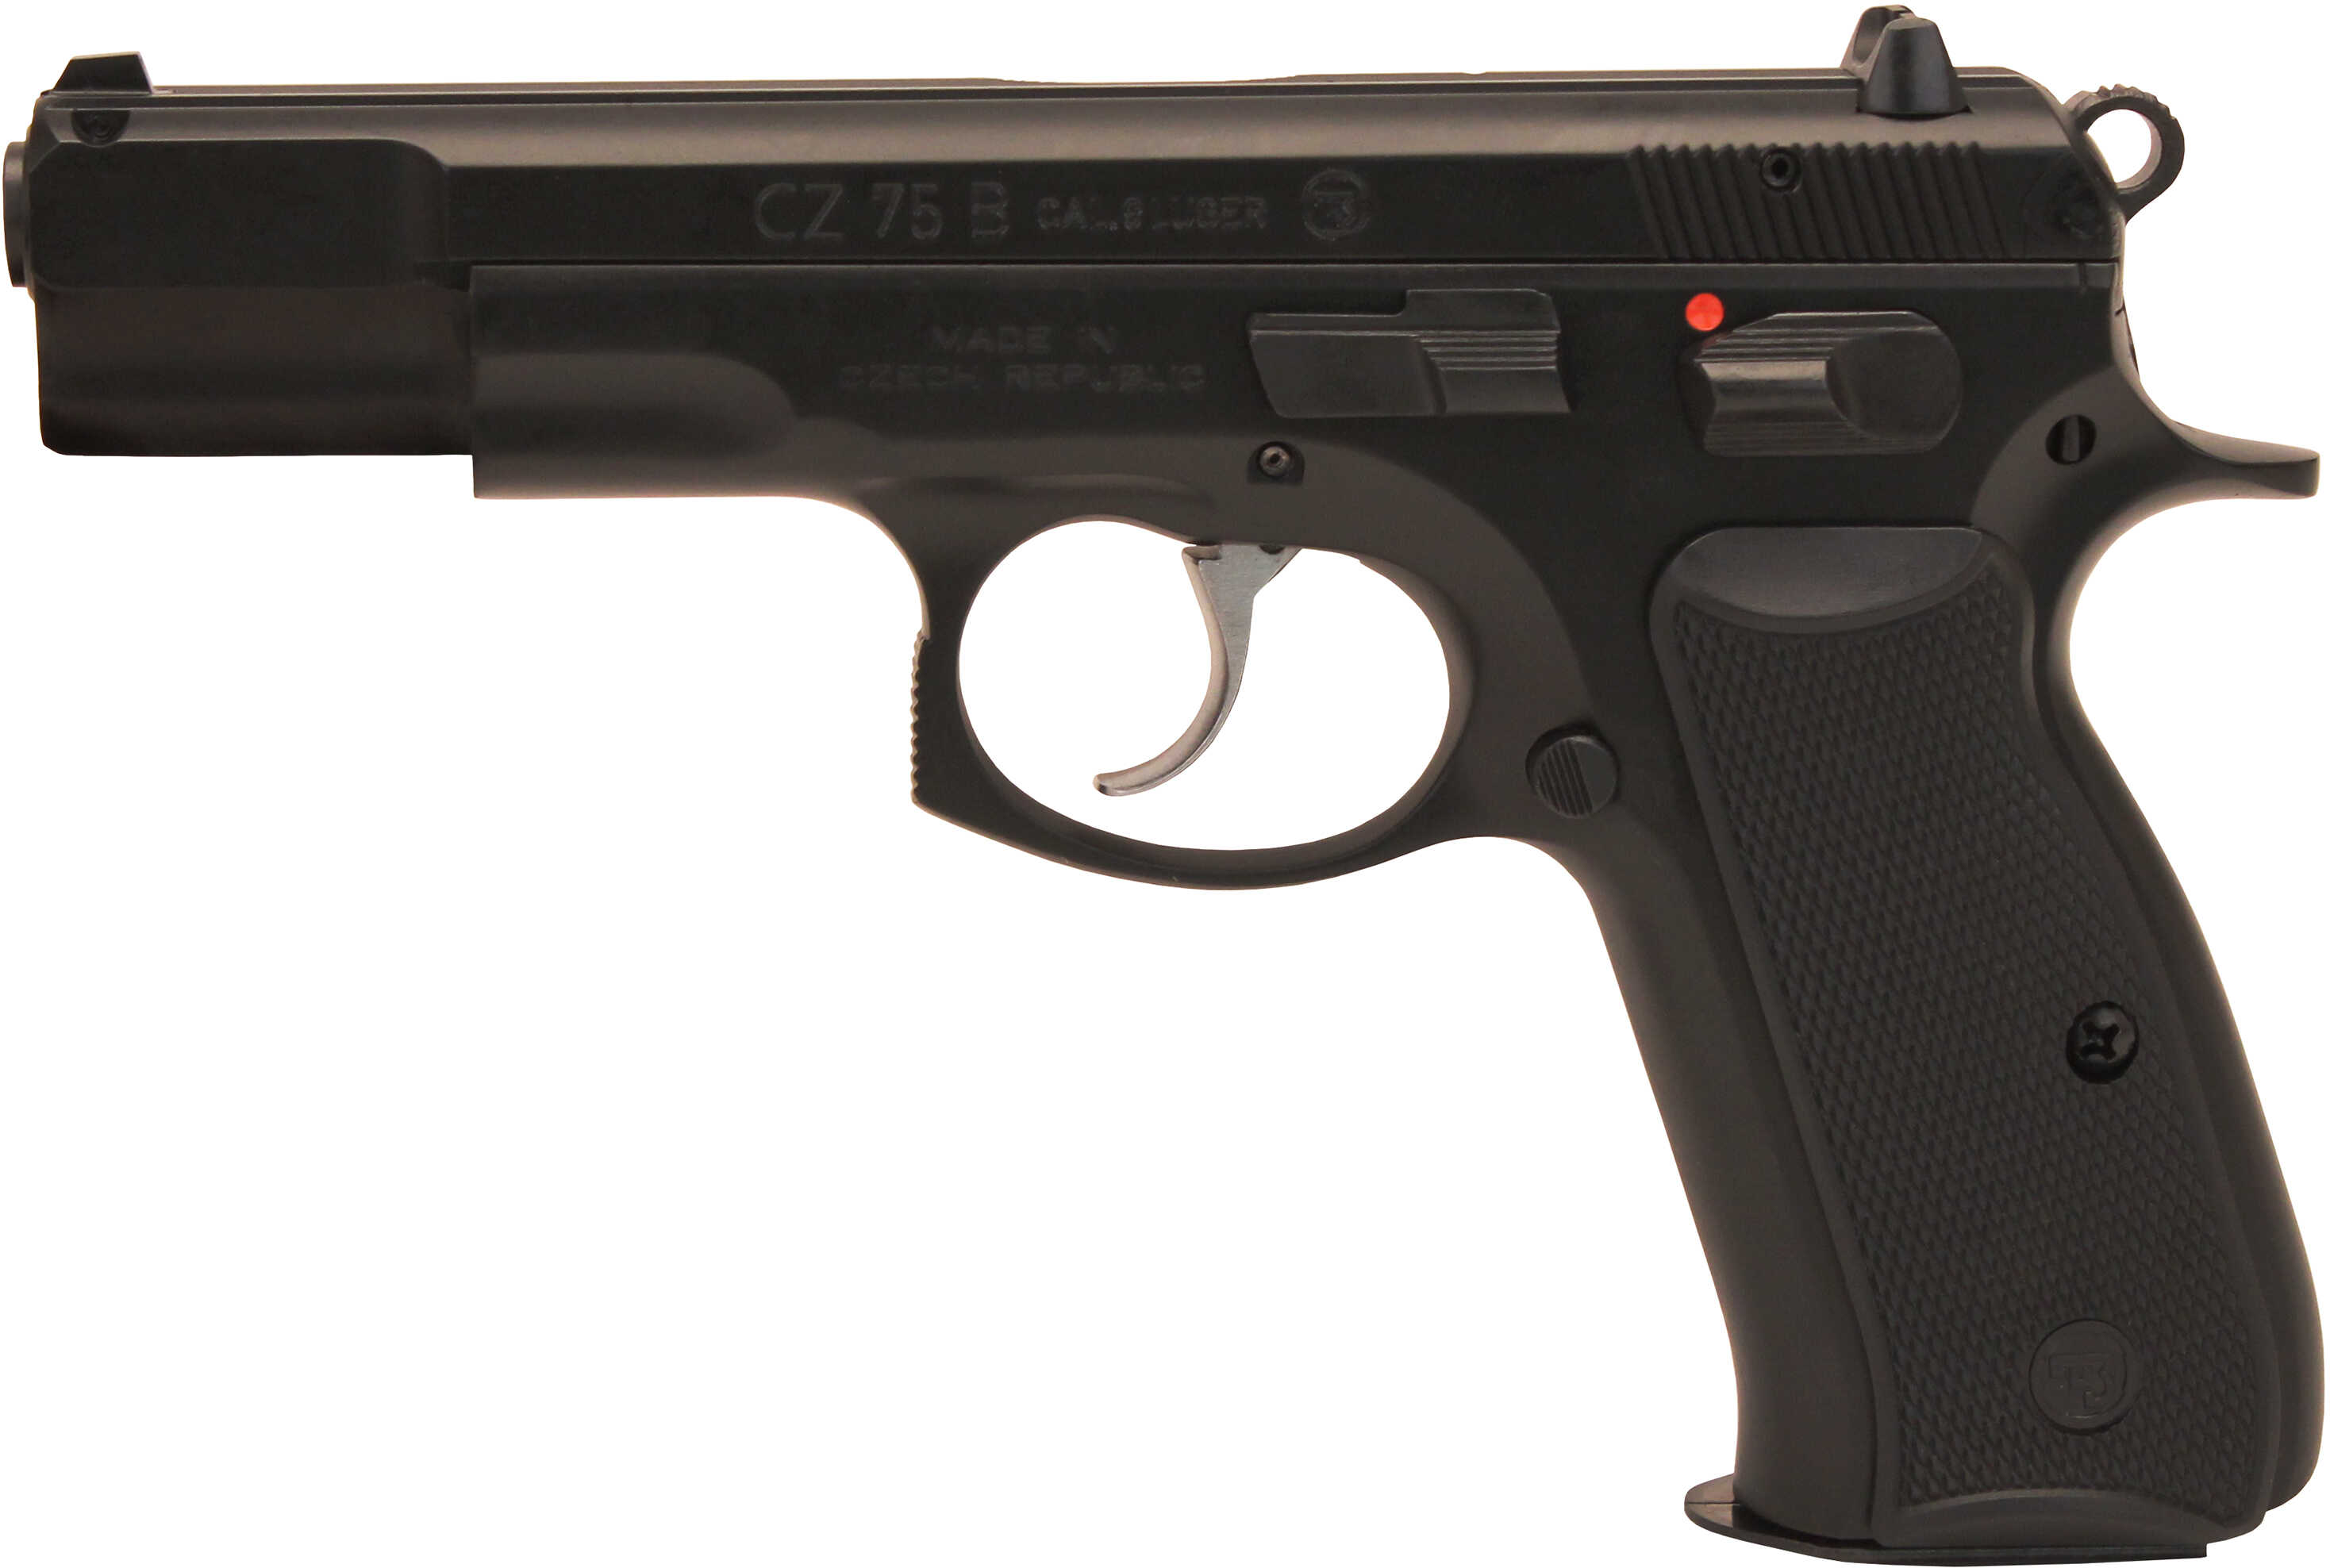 Pistol CZ USA 75B 9mm Luger Black Polycoat 16 Round 91102